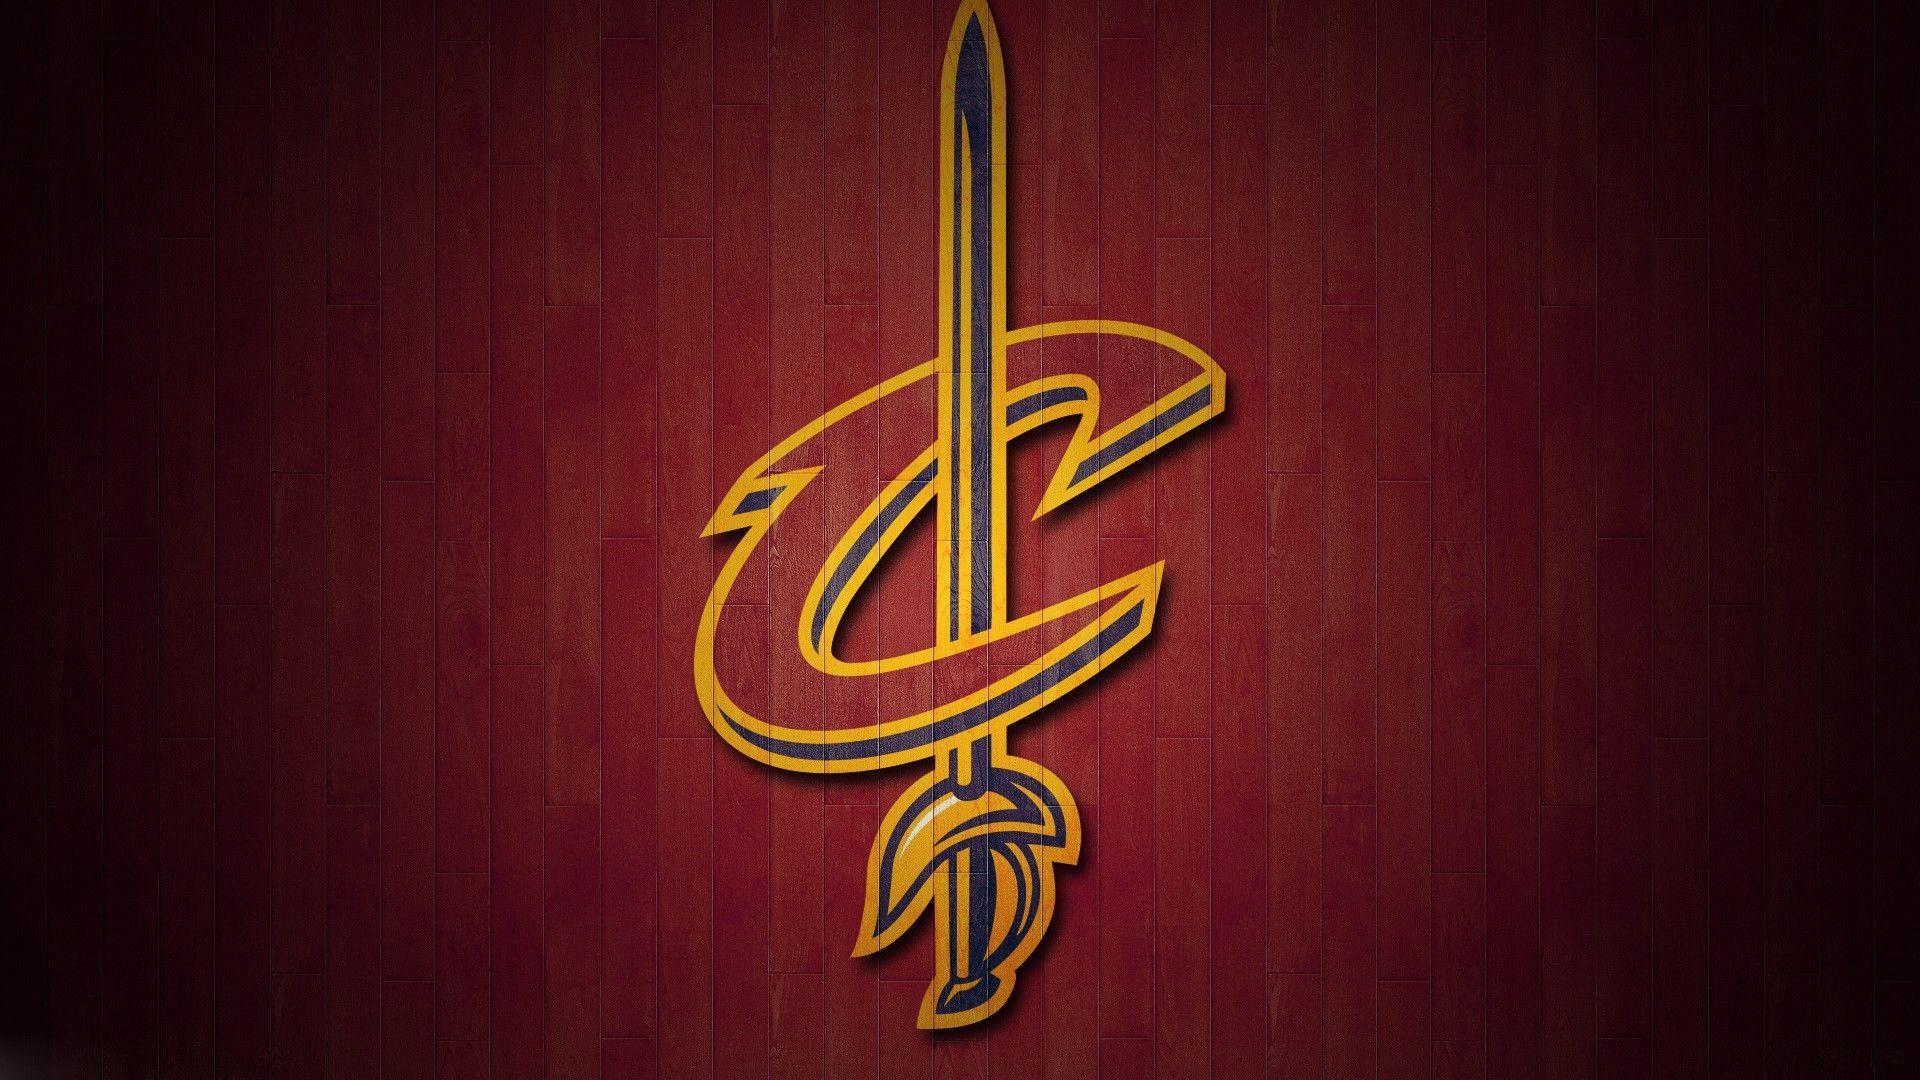 Cleveland Cavaliers Basketball Wallpaper